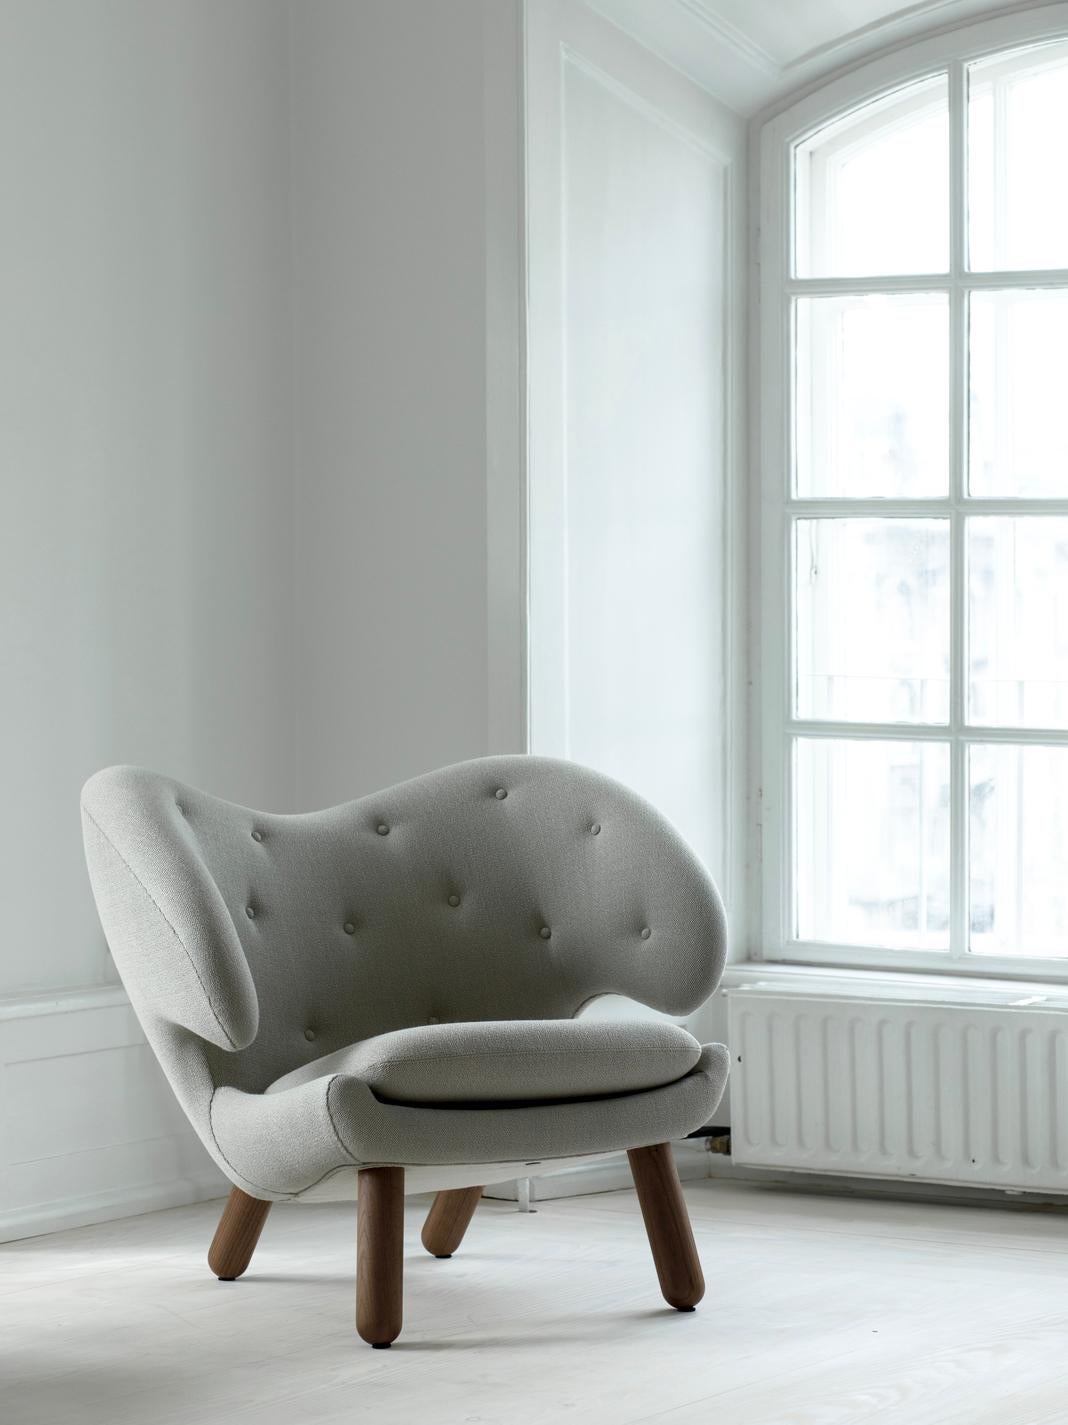 Finn Juhl Pelican Chair Upholstered in Fabric 2